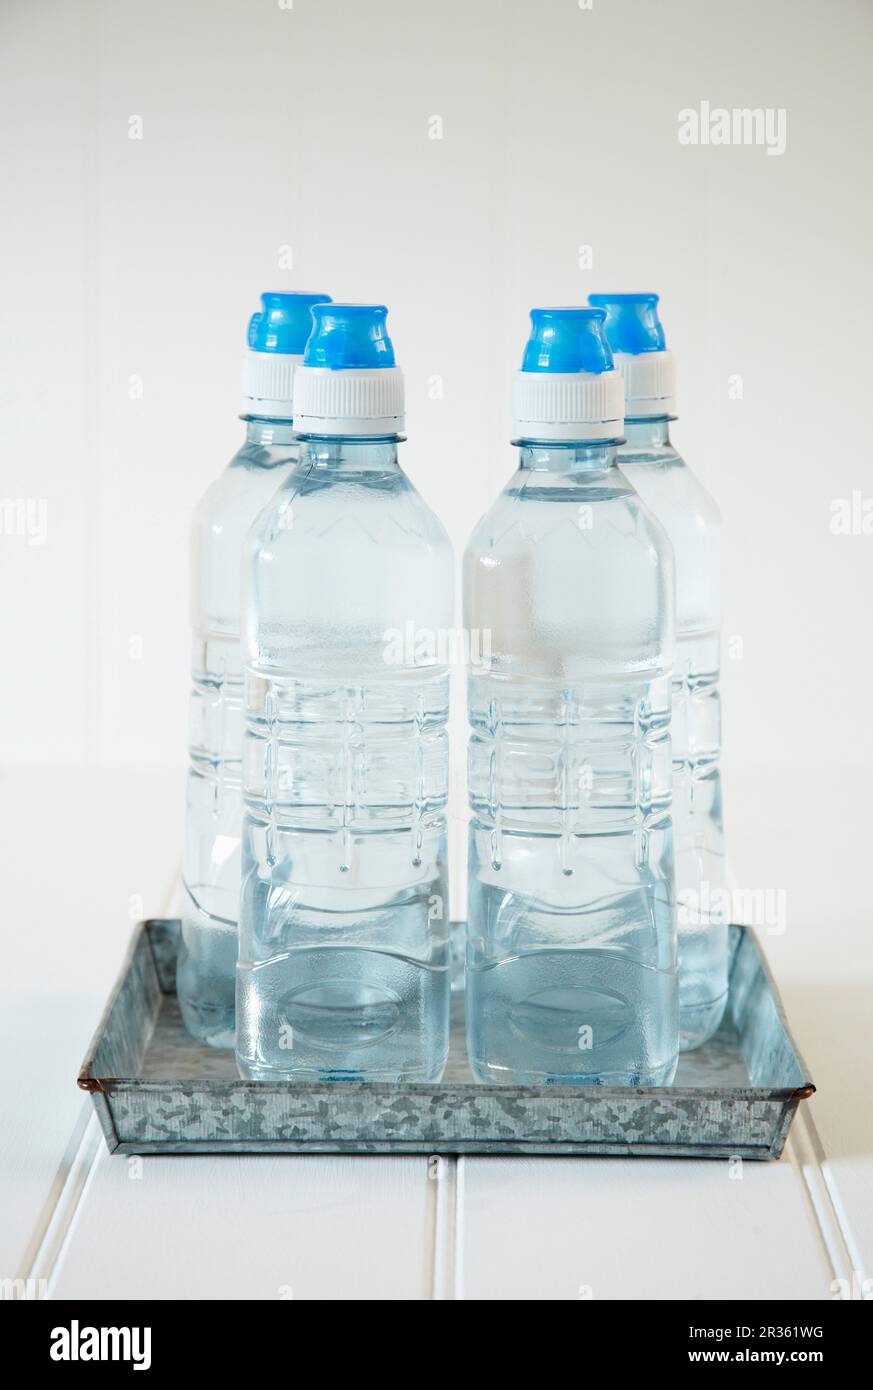 https://c8.alamy.com/comp/2R361WG/four-bottles-of-water-on-a-metal-tray-2R361WG.jpg